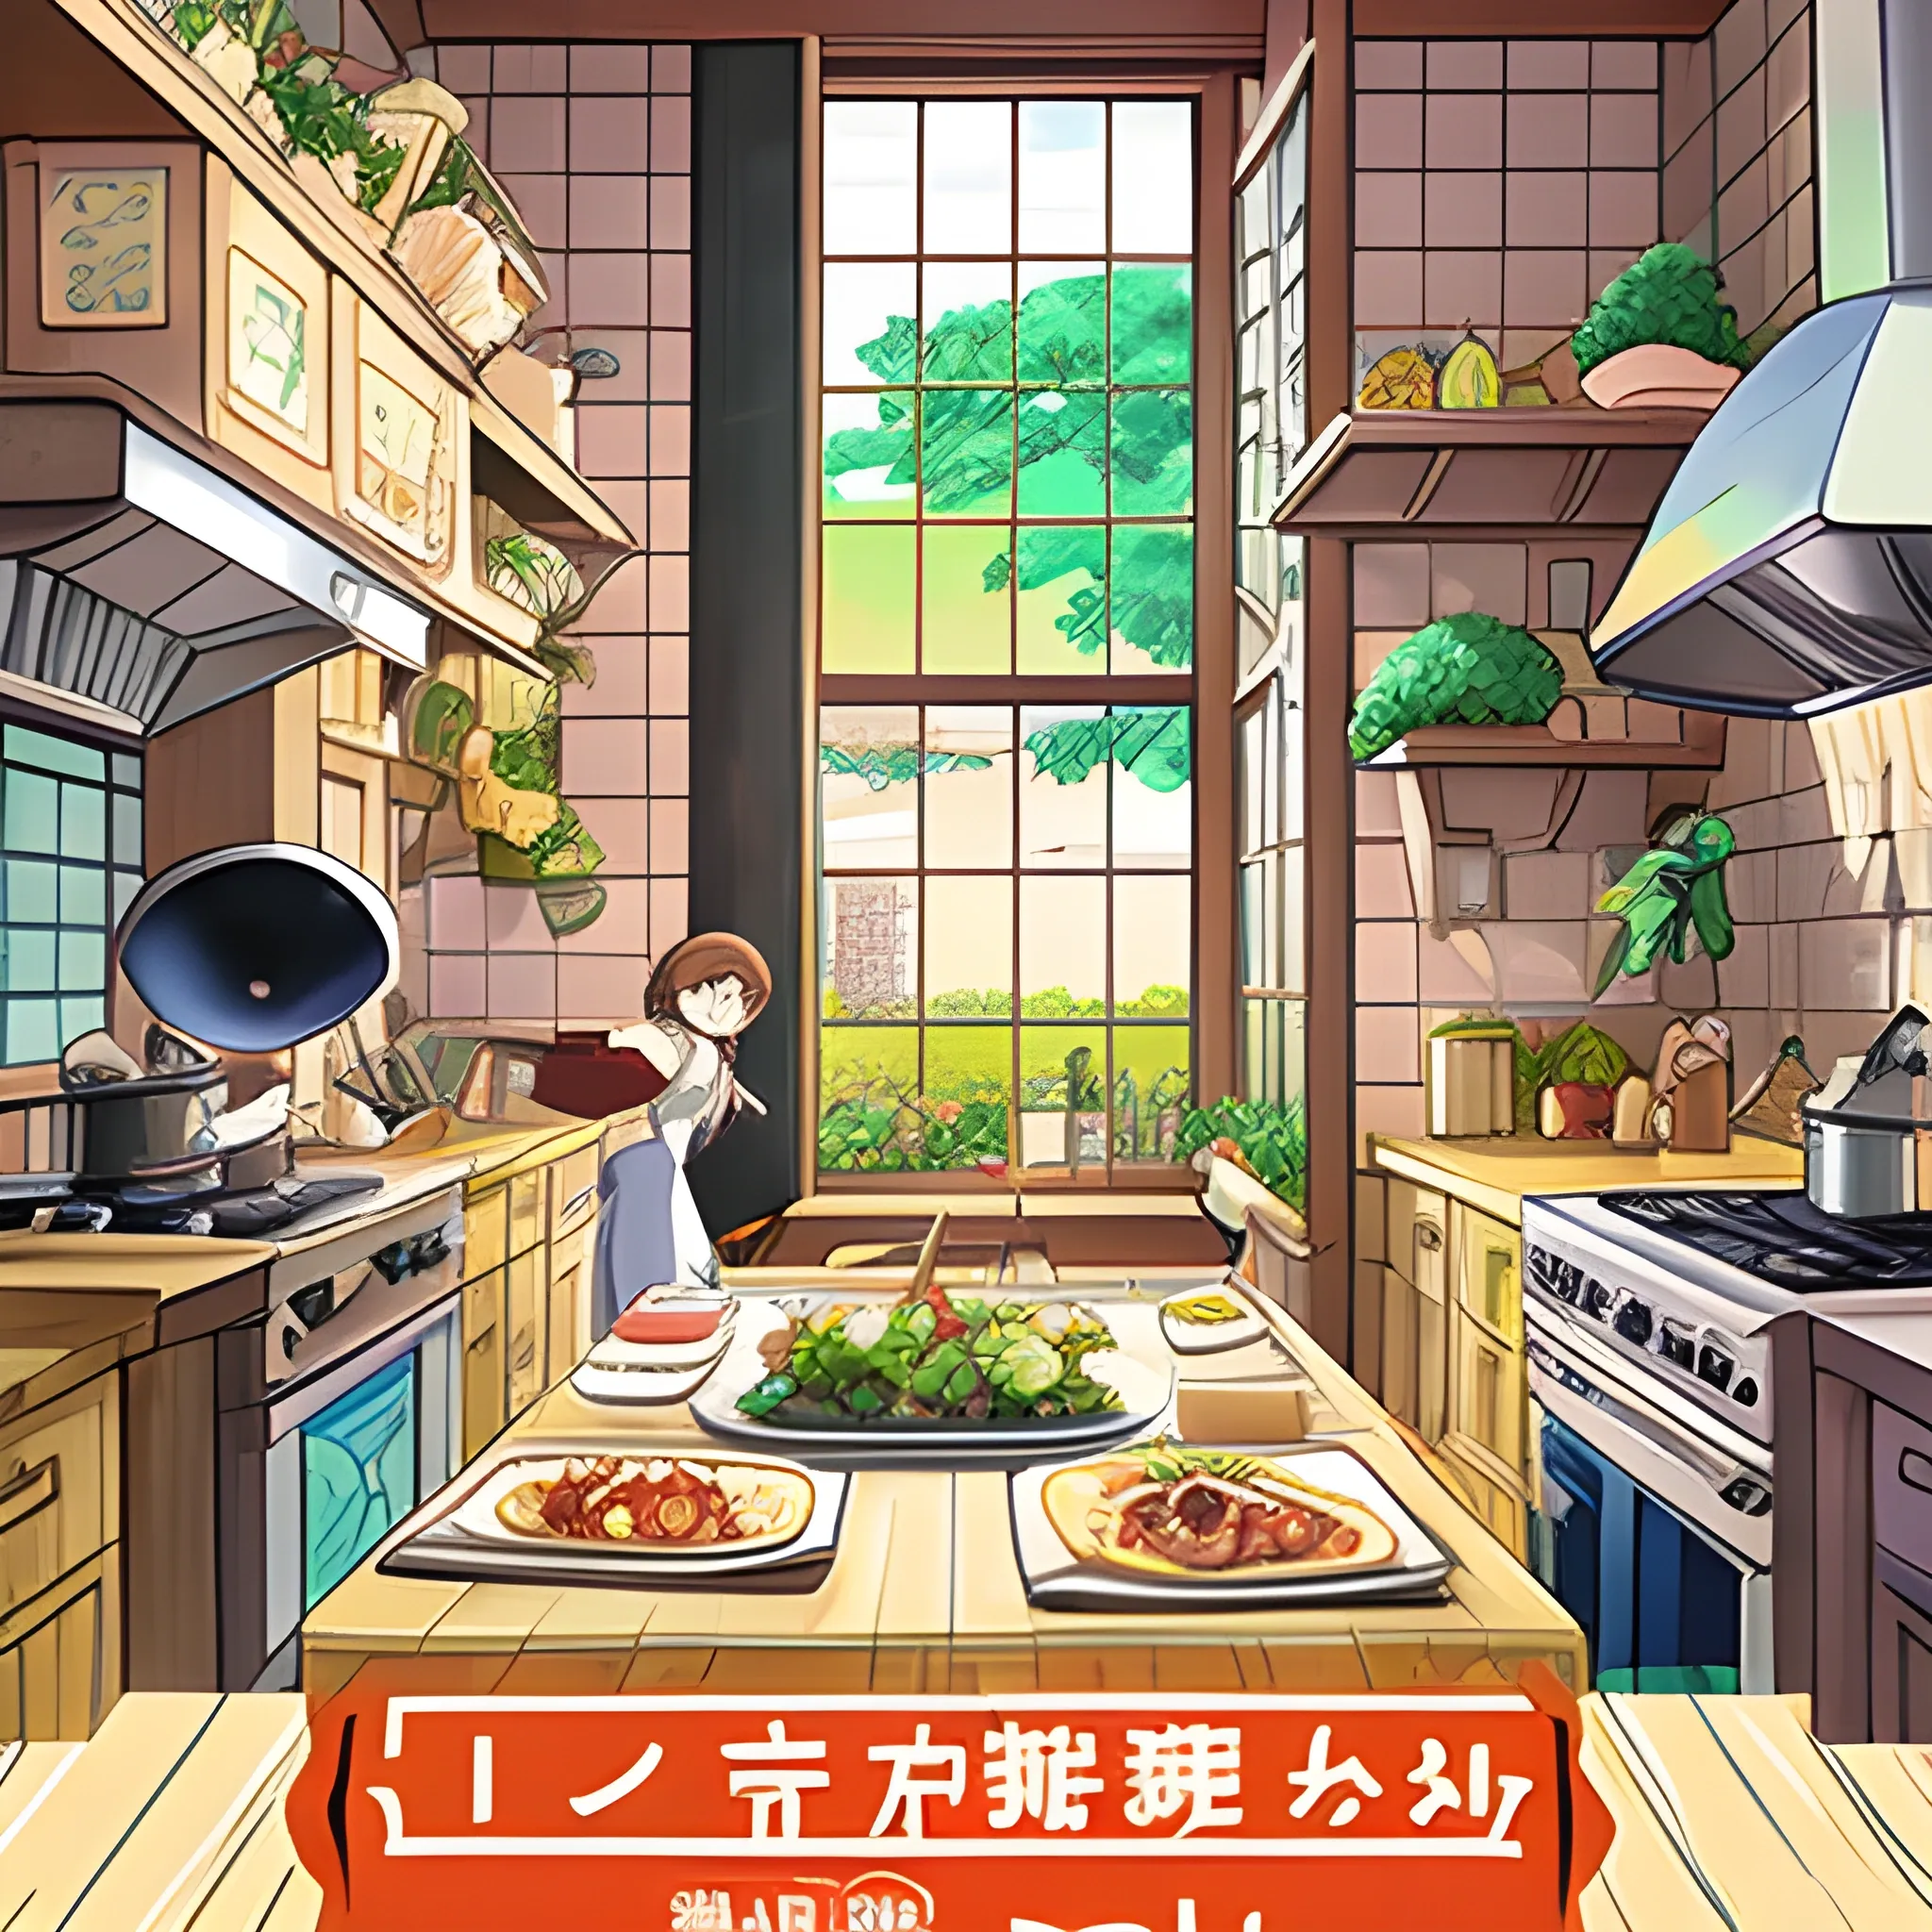 10 Anime Characters Fridge Magnets : Amazon.co.uk: Home & Kitchen